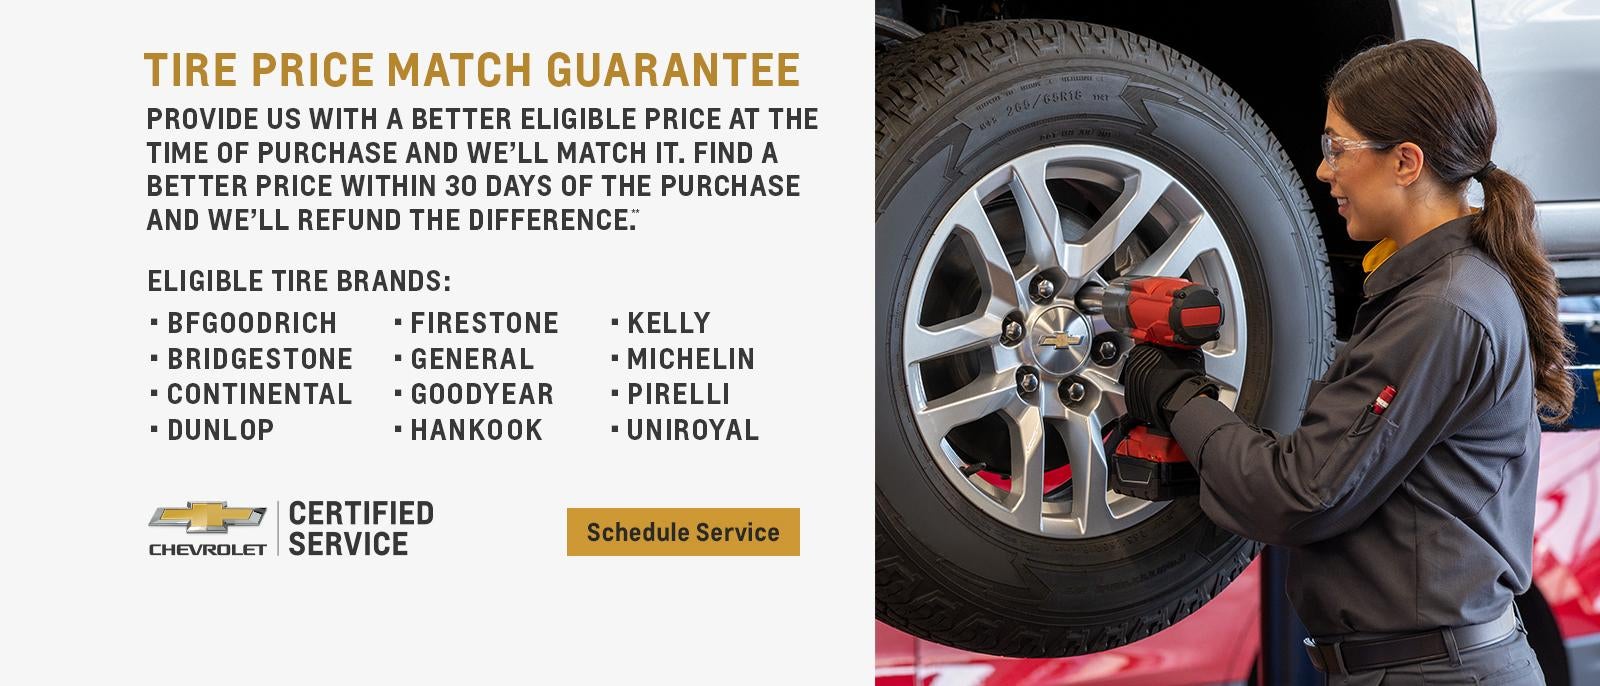 Tire Price Match Guarantee at Alan Webb Chevrolet Vancouver WA